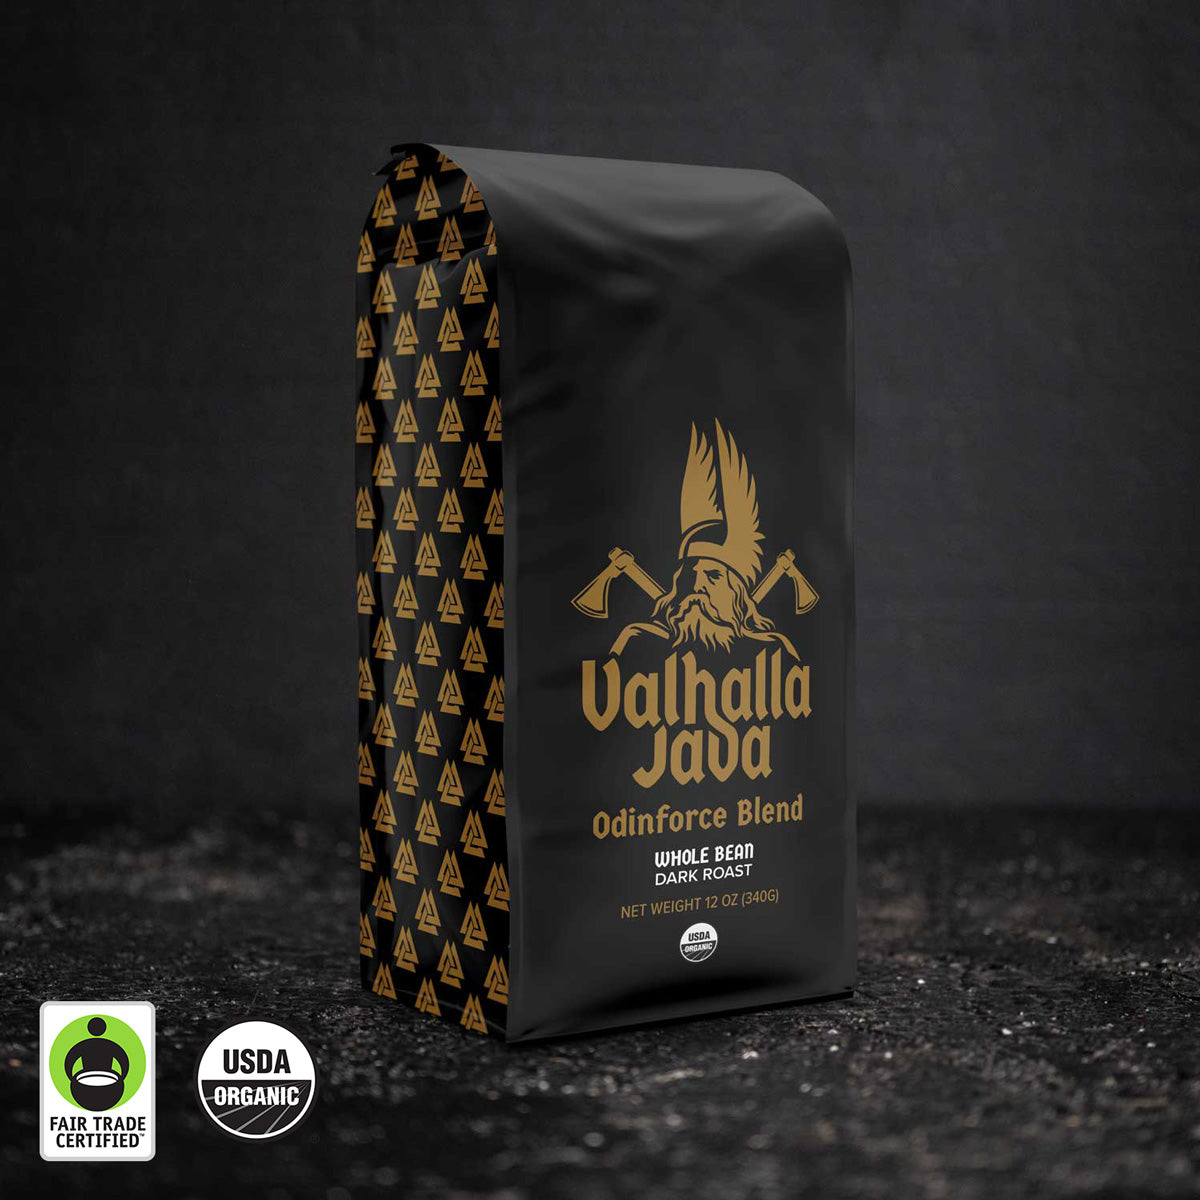 Death Wish Coffee Valhalla Java Odinforce Blend Whole Bean Coffee